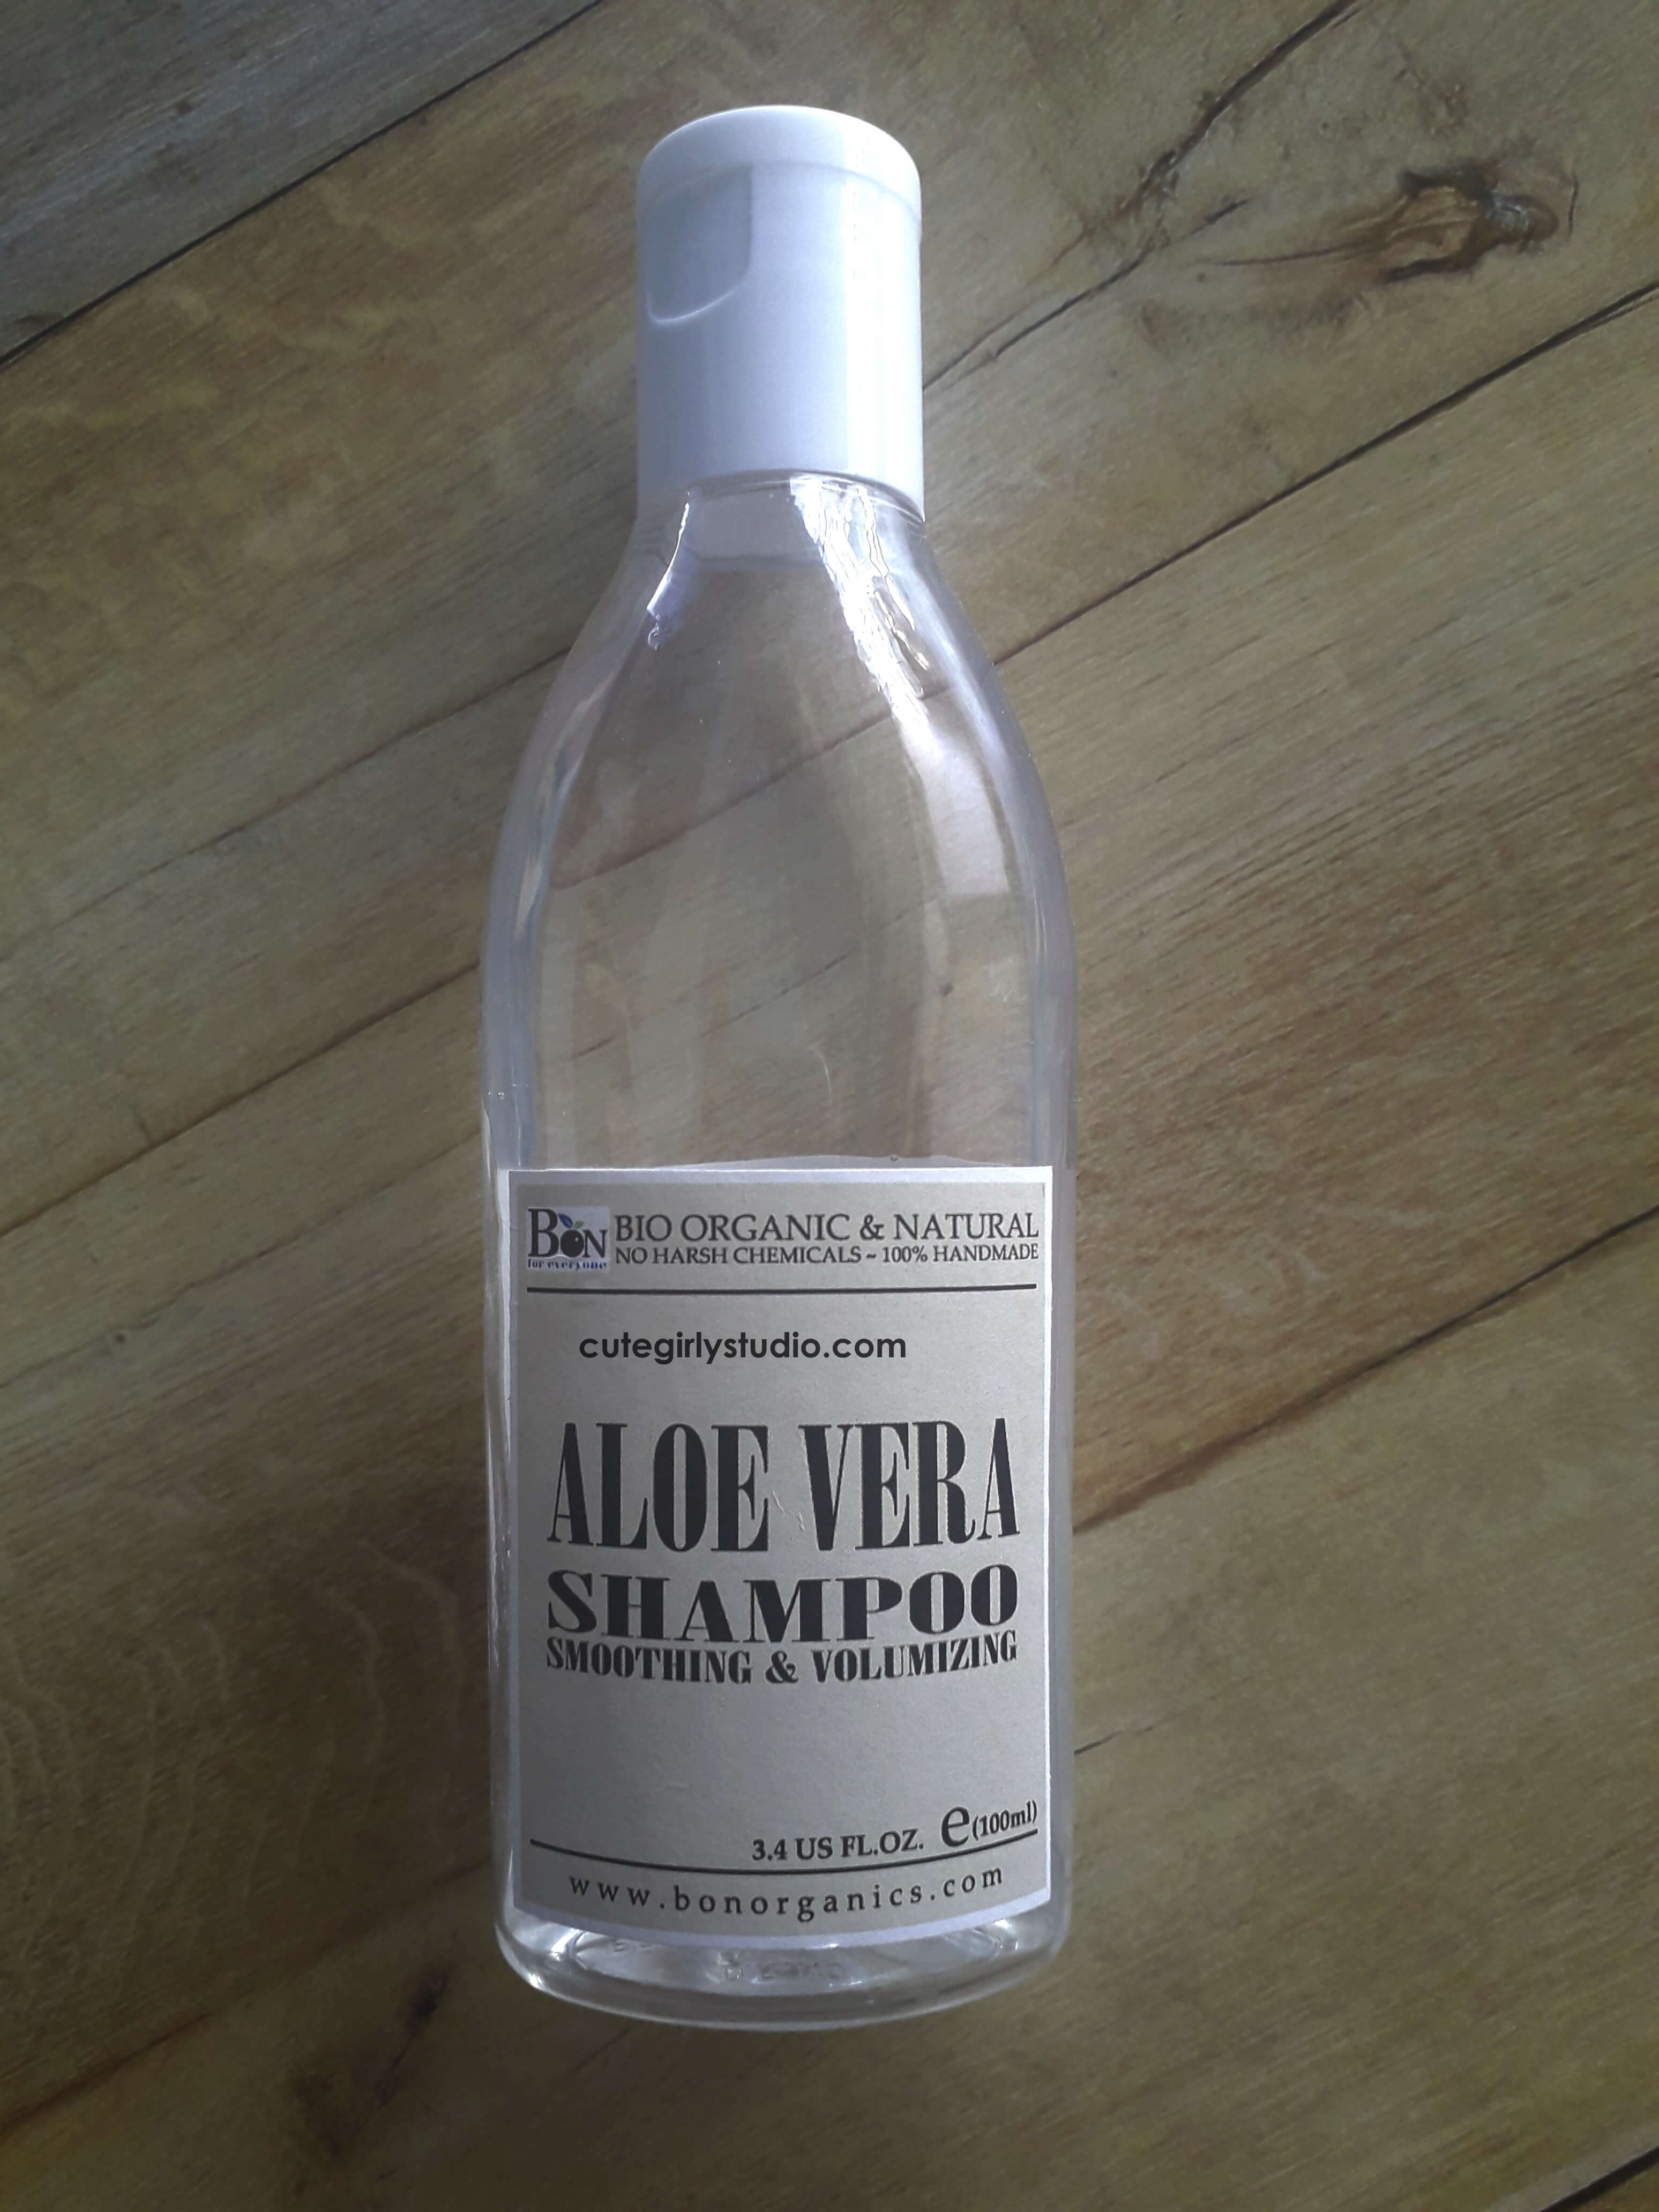 Bon organics aloe vera shampoo review